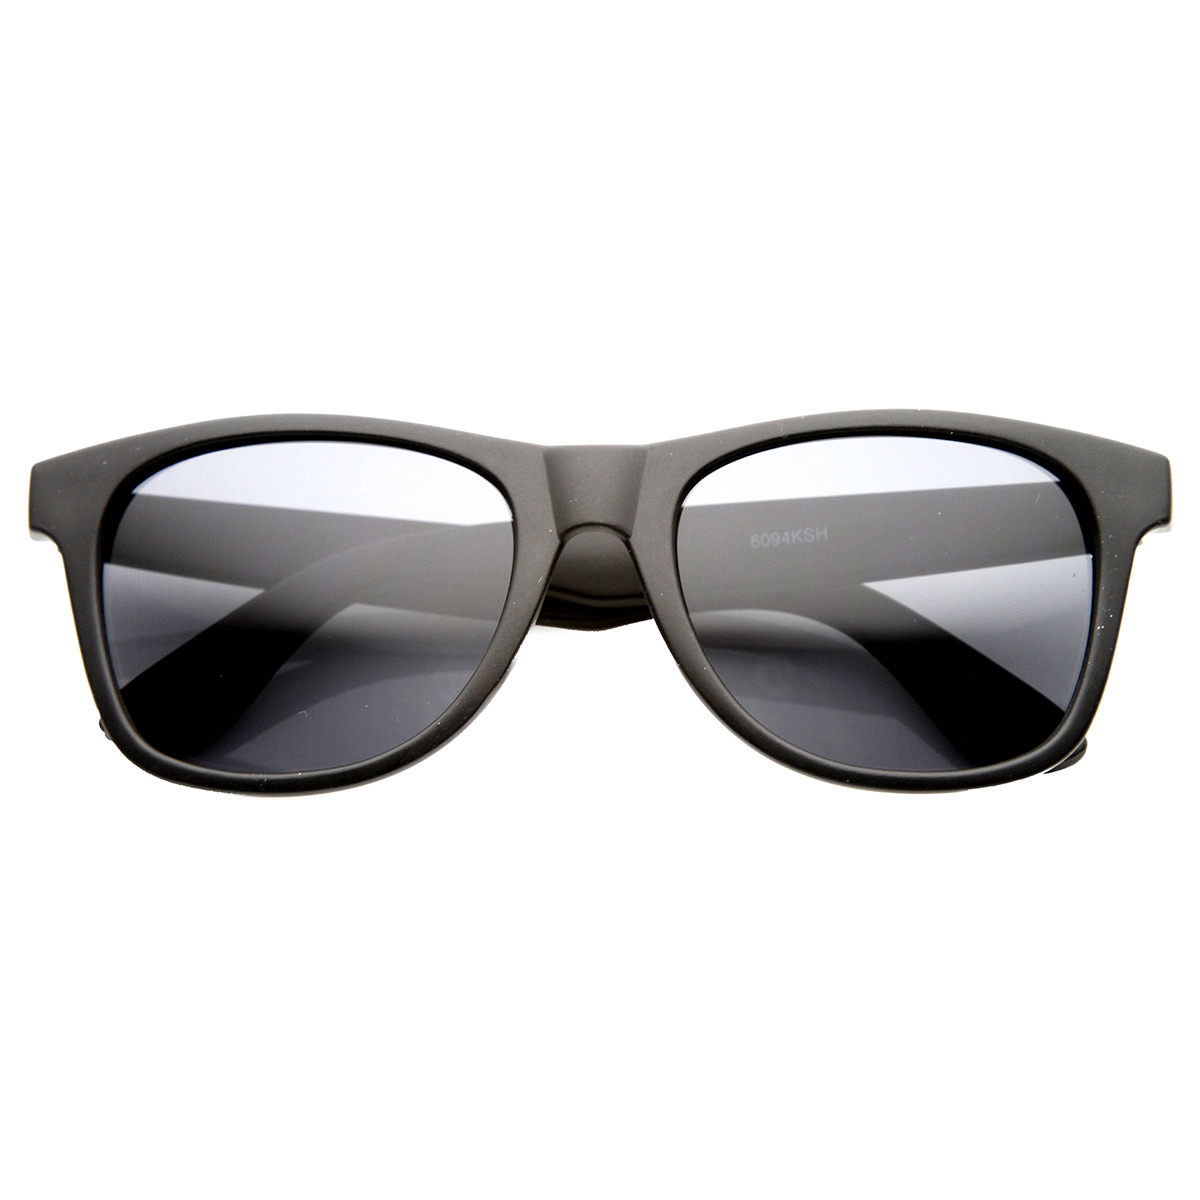 Mens Retro Classic Clean Plastic Horned Rimmed Sunglasses 9654 - Shiny-Black Smoke